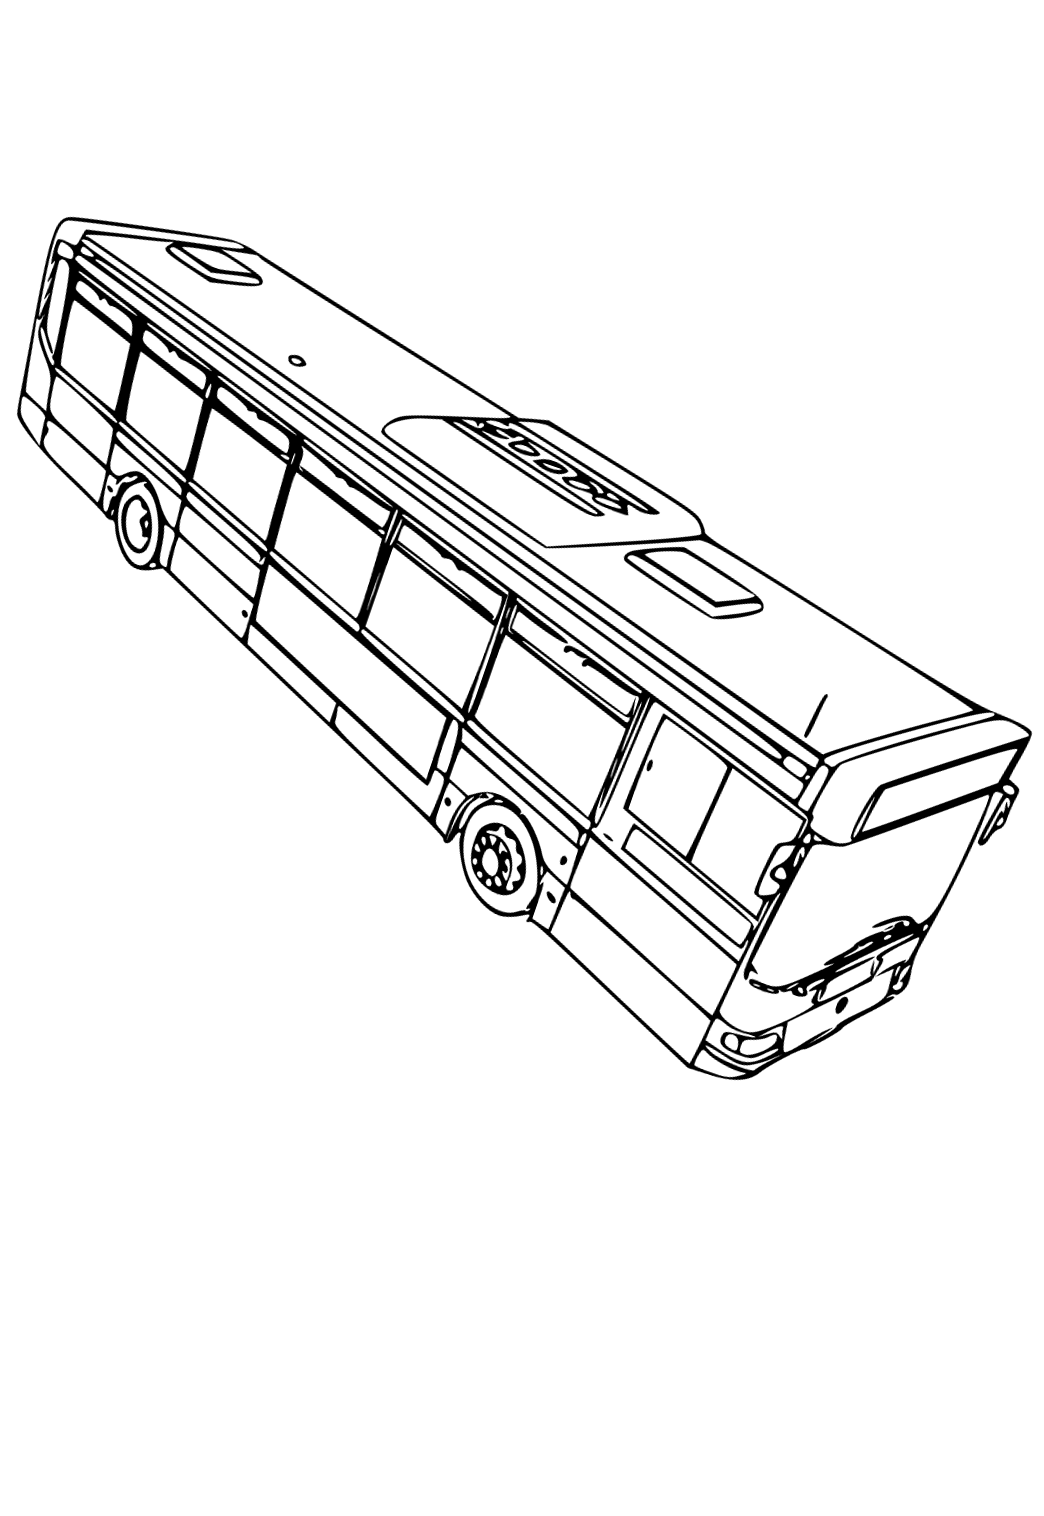 Autobusas